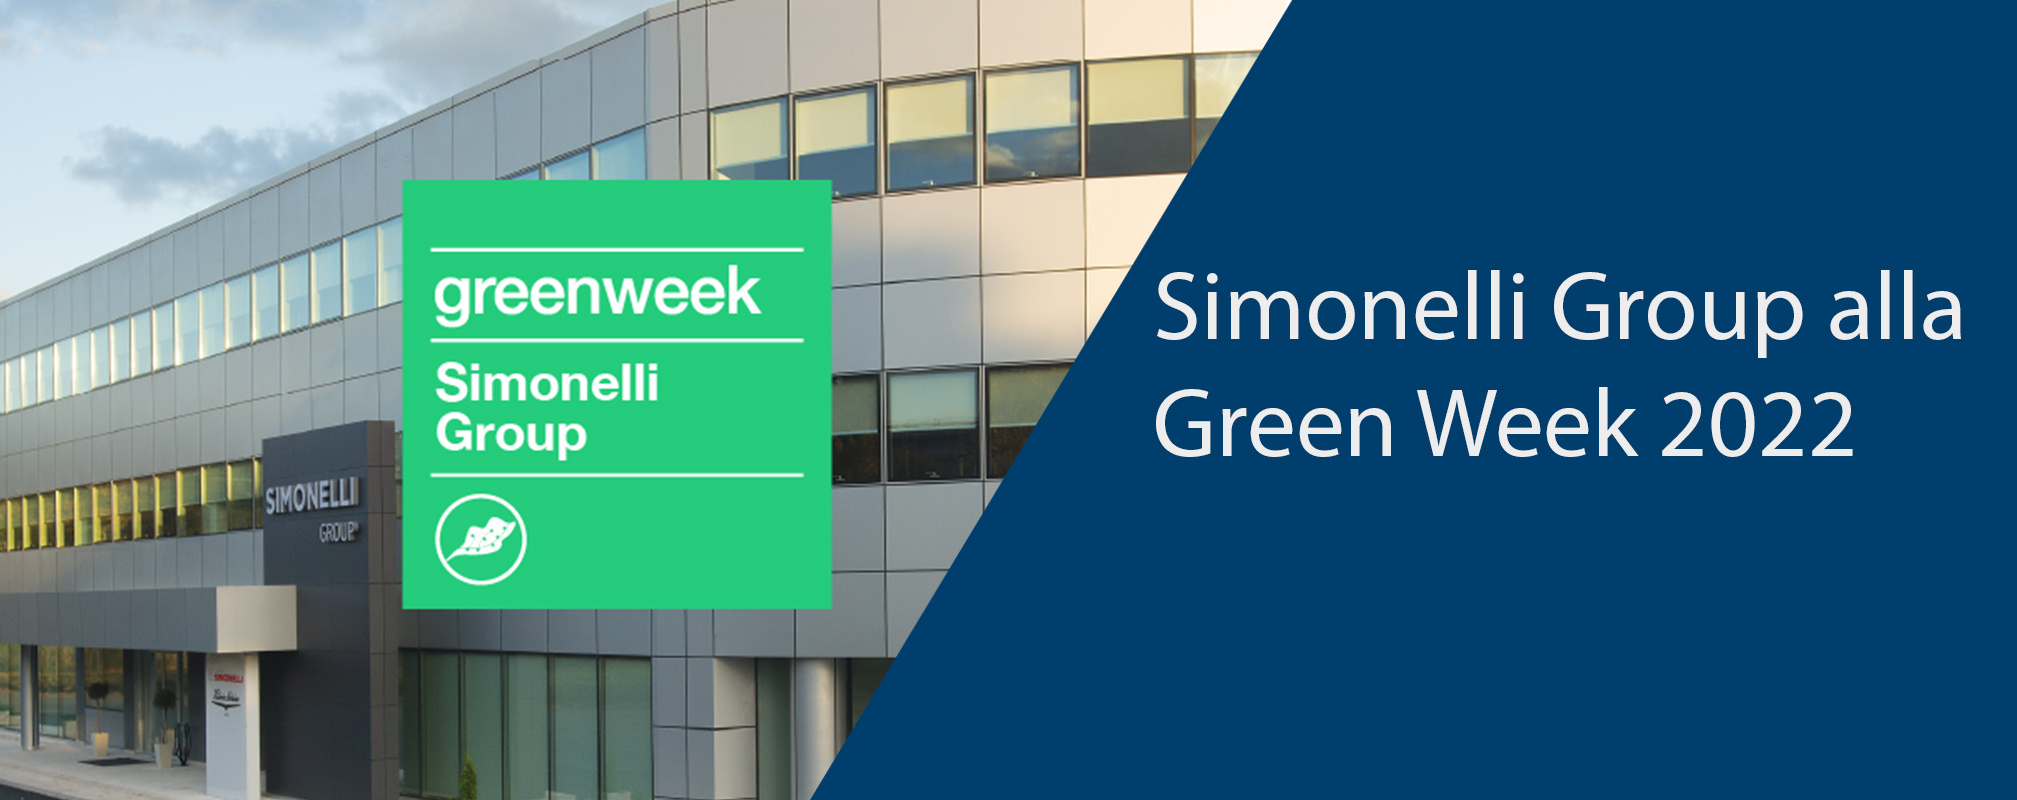 Simonelli Group alla Green Week 2022